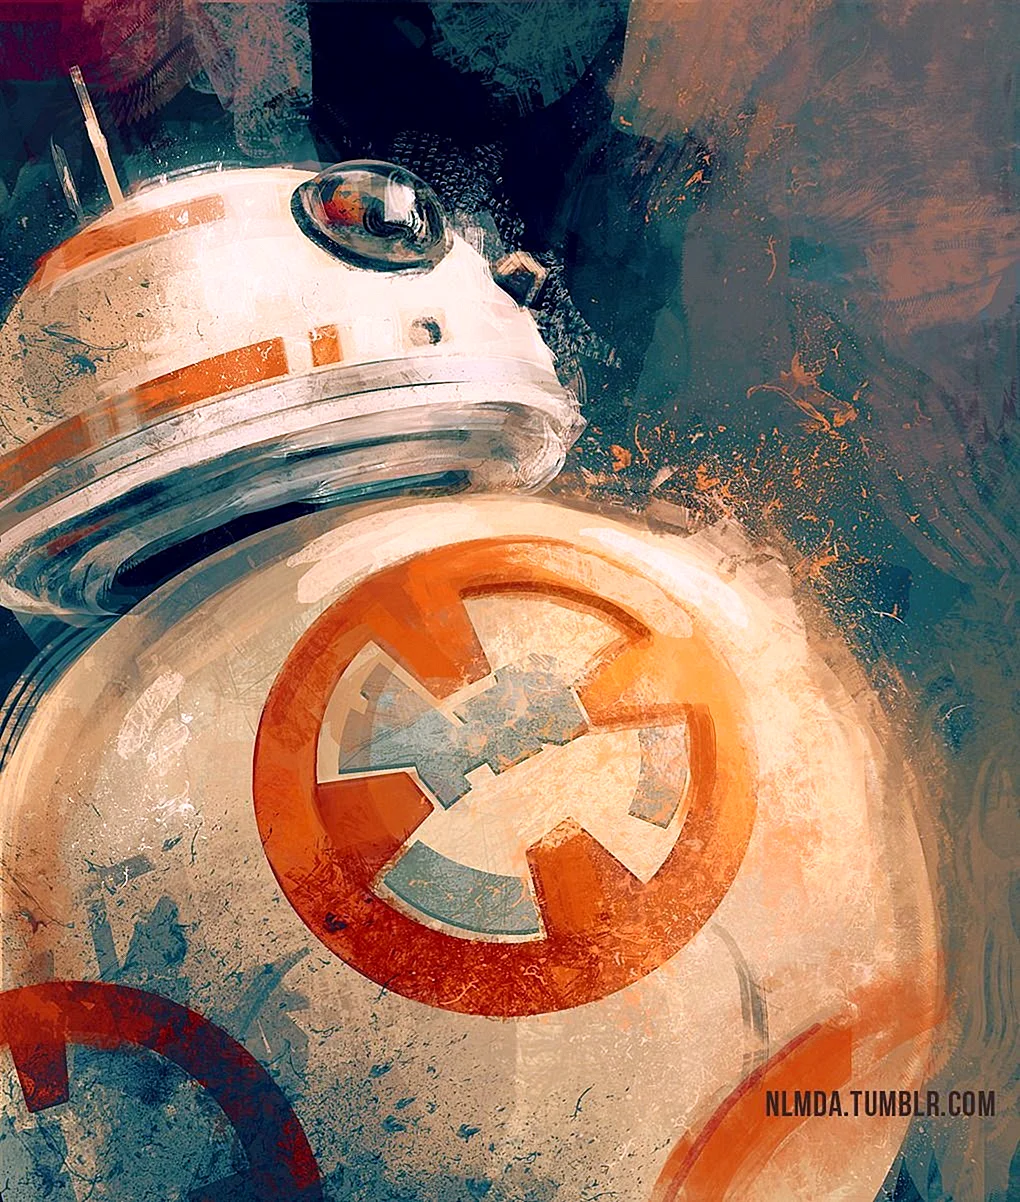 Star Wars Bb 8 Poster Wallpaper